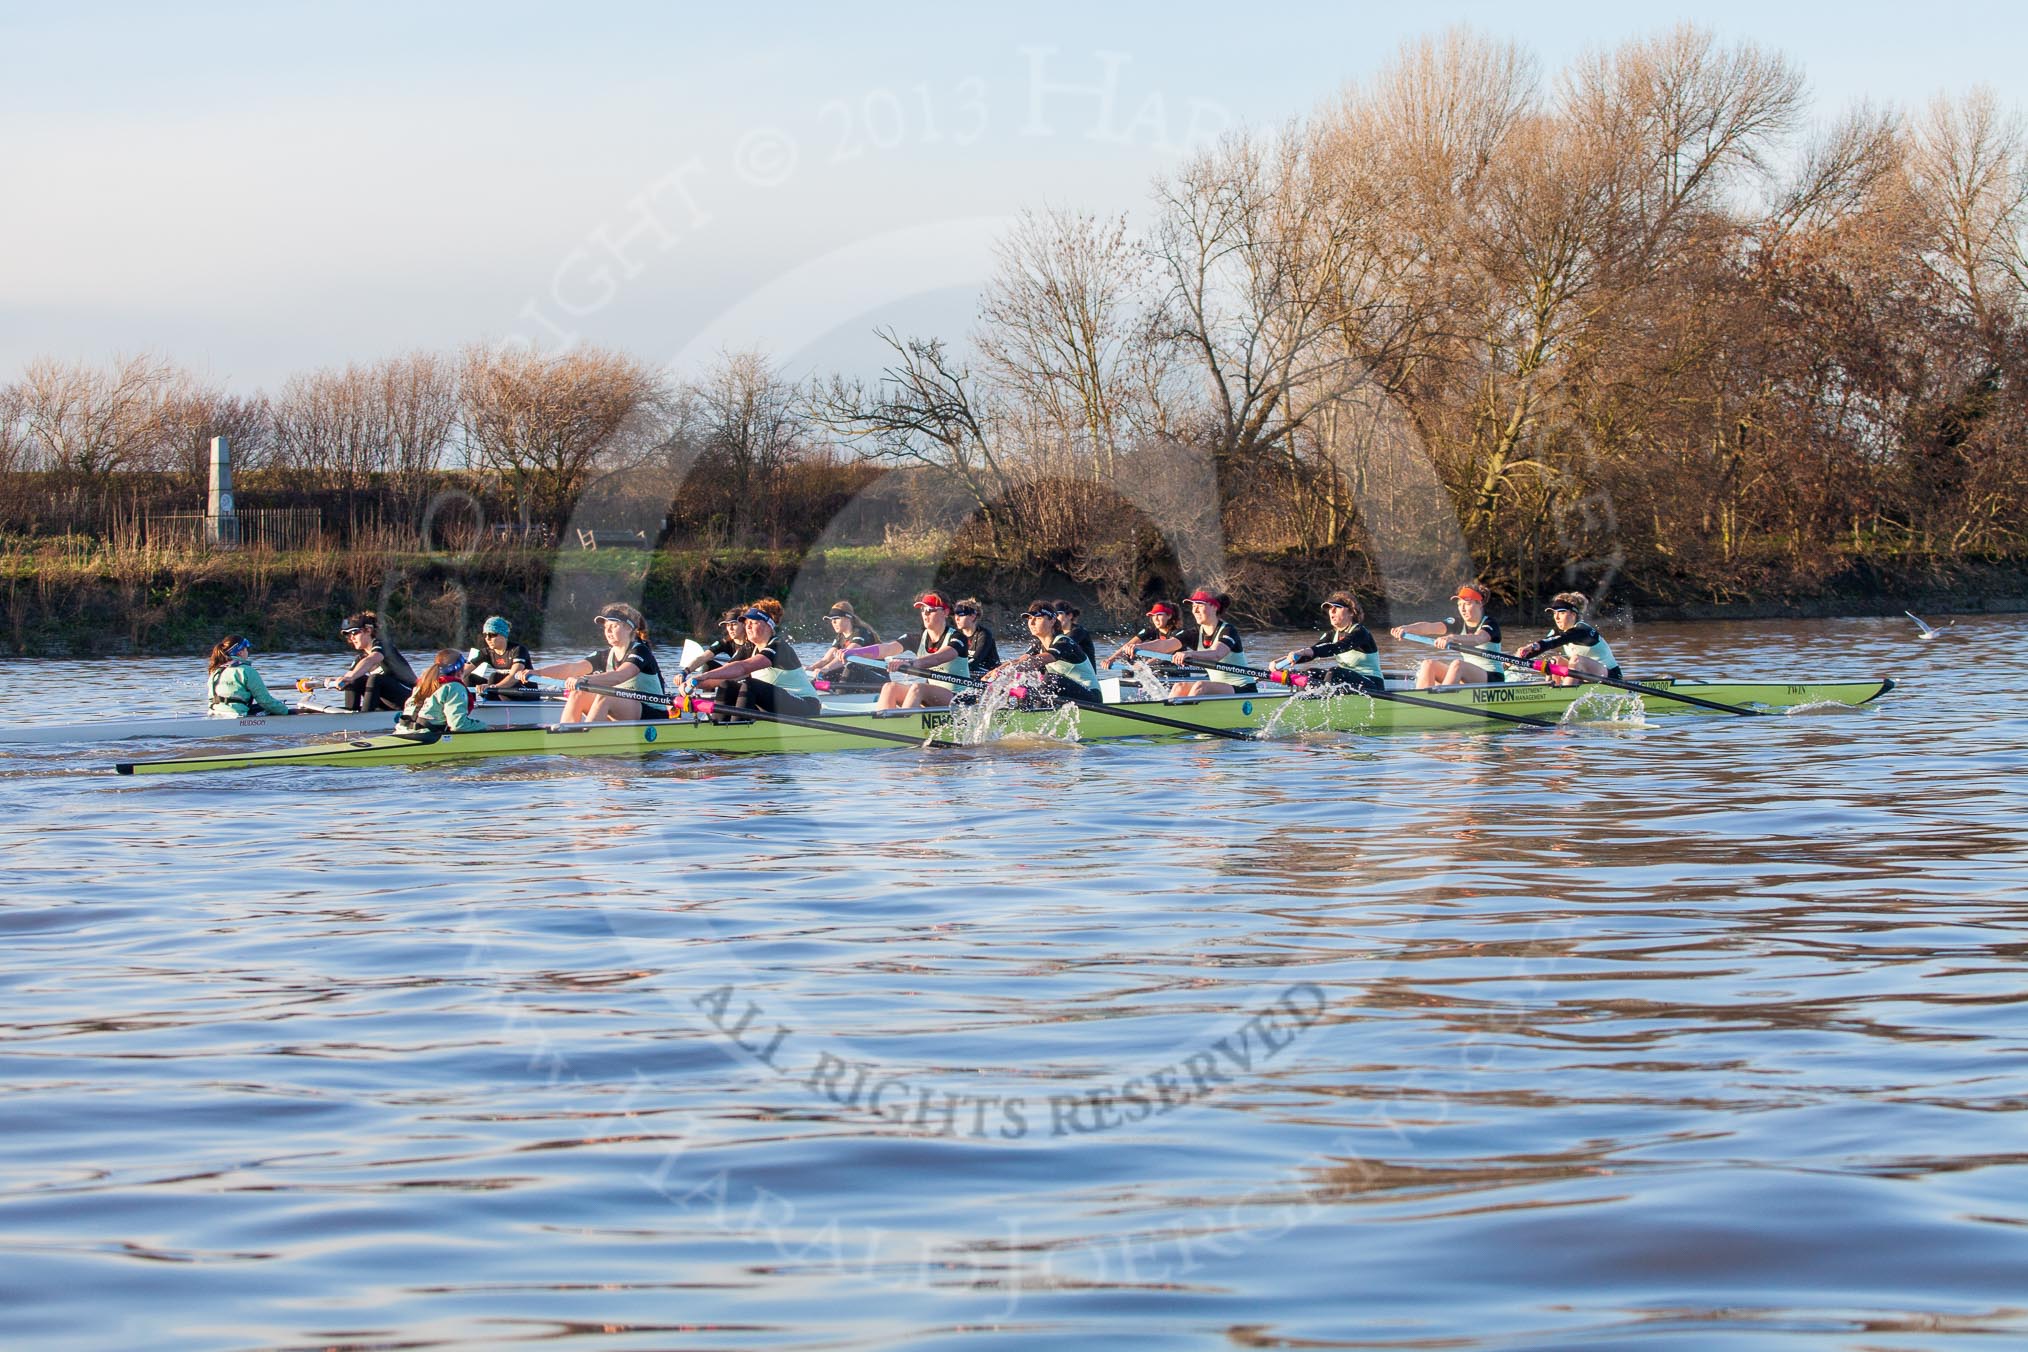 The Boat Race season 2014 - Women's Trial VIIIs(CUWBC, Cambridge): Nudge Nudge vs Wink Wink..
River Thames between Putney Bridge and Mortlake,
London SW15,

United Kingdom,
on 19 December 2013 at 14:06, image #375